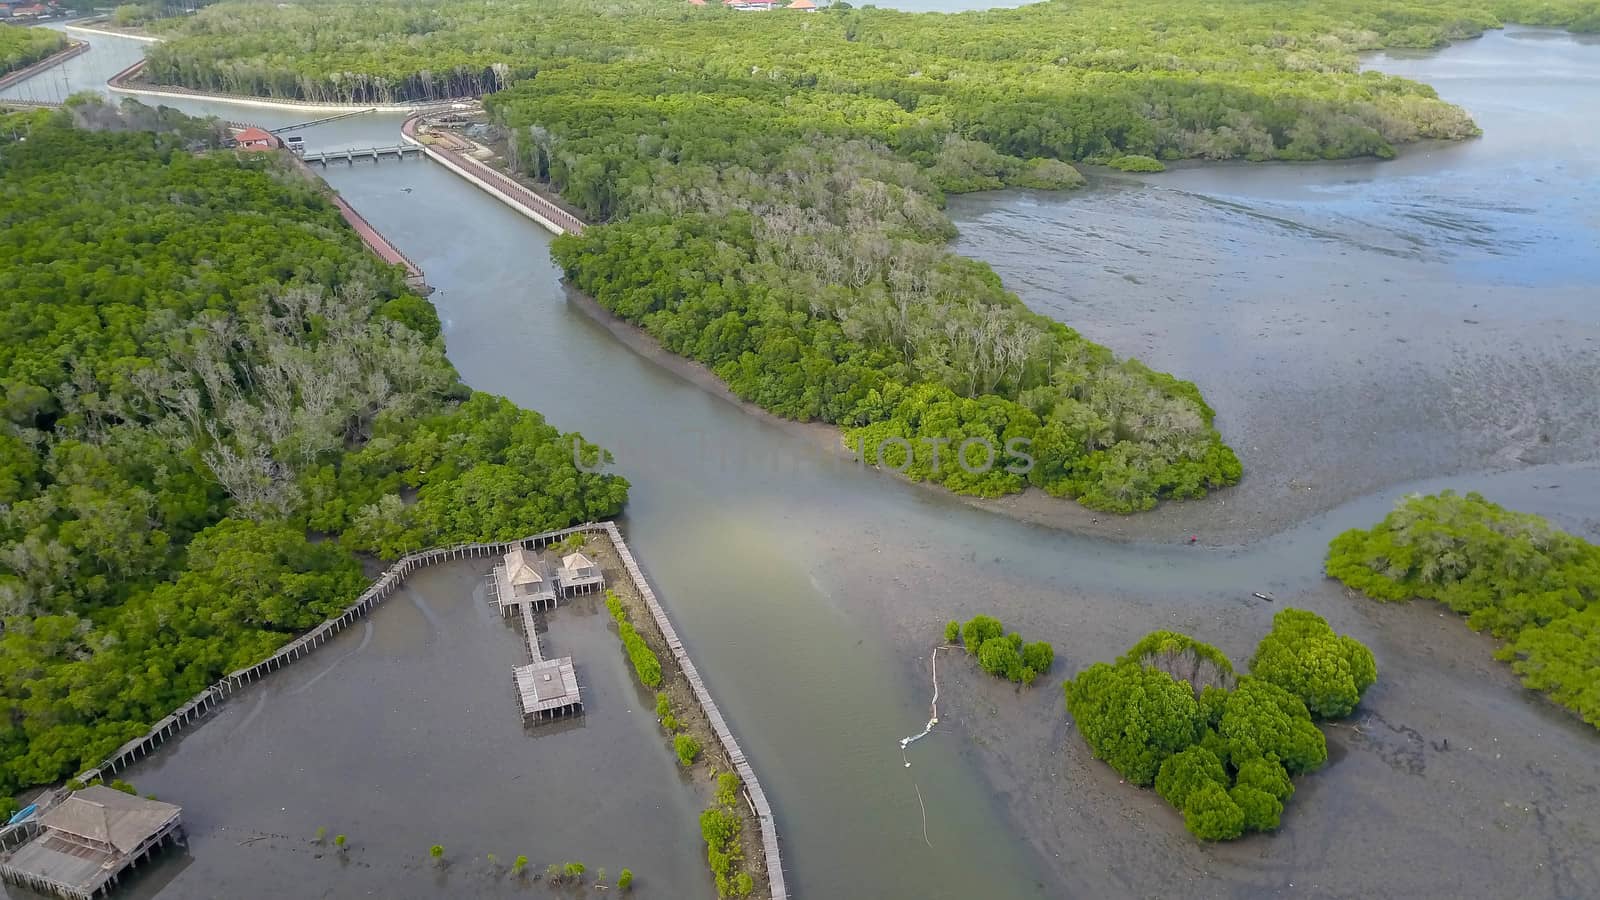 Aerial view drone video of mangroves on Bali island, Indonesia. Serangan island.